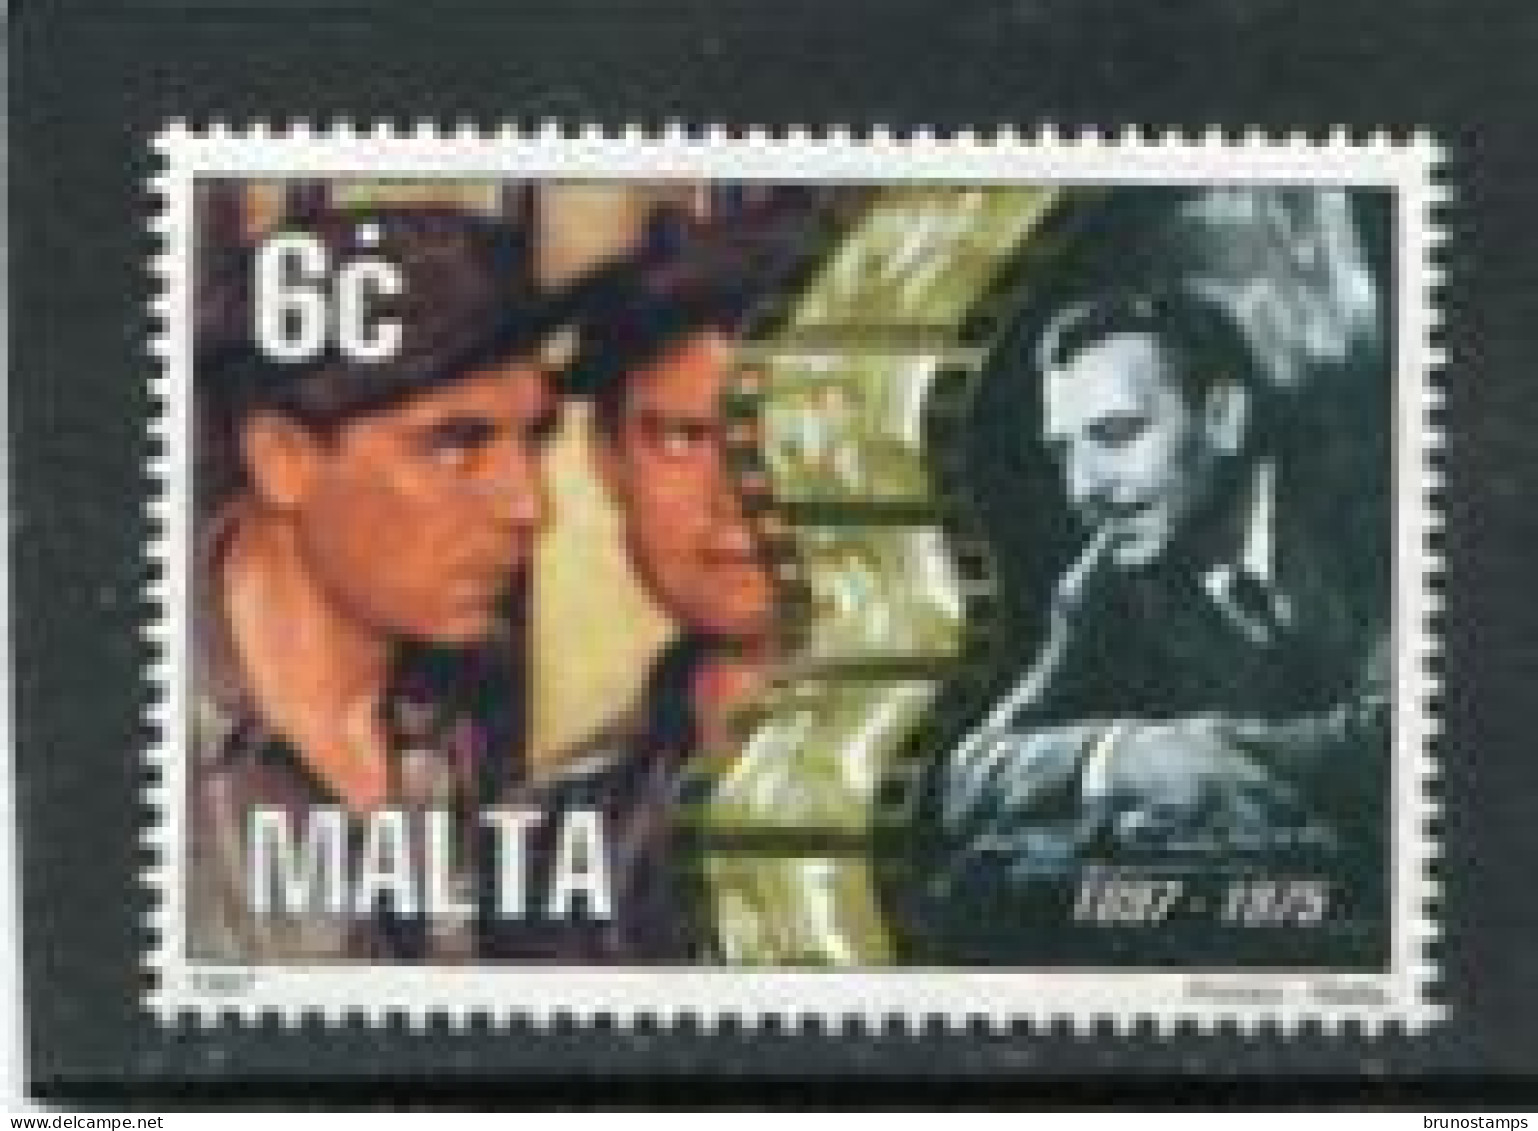 MALTA - 1997  6c  CALLEIA  MINT NH - Malte